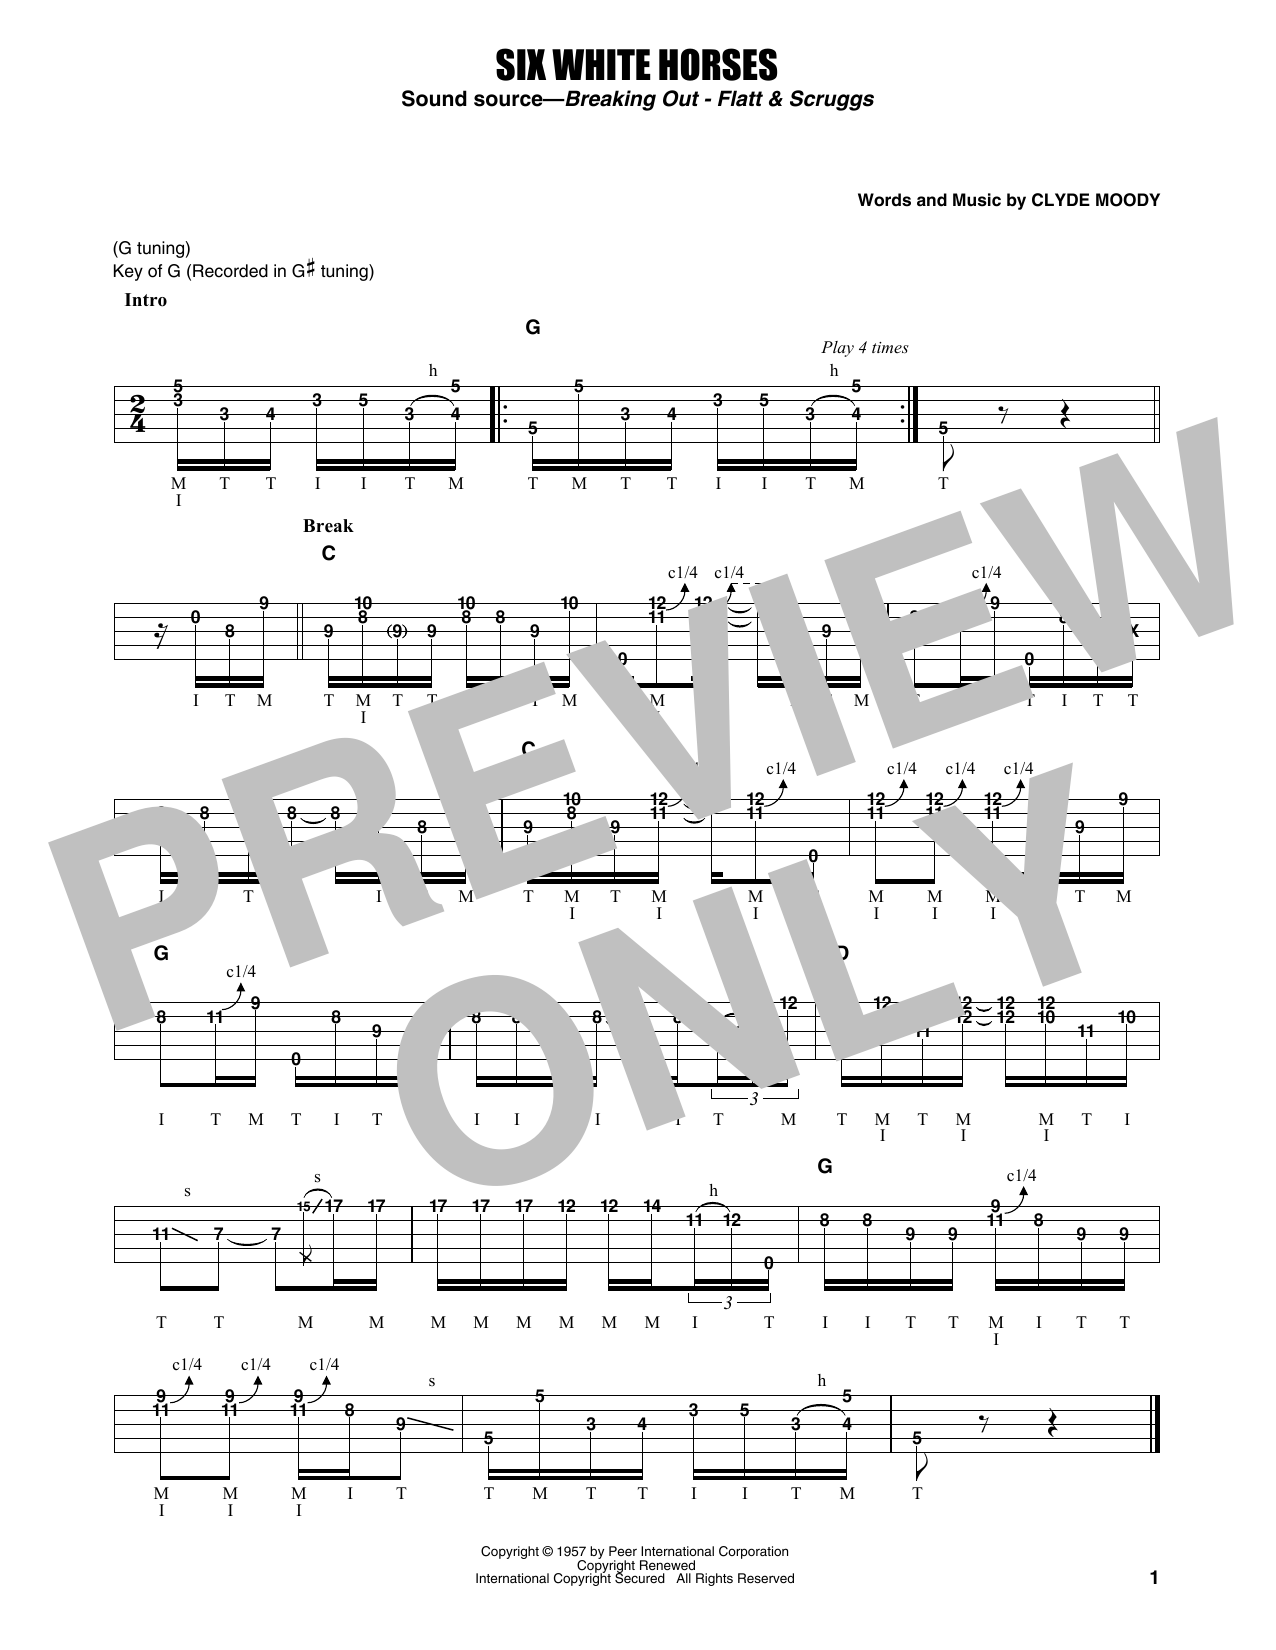 Flatt & Scruggs Six White Horses Sheet Music Notes & Chords for Banjo Tab - Download or Print PDF